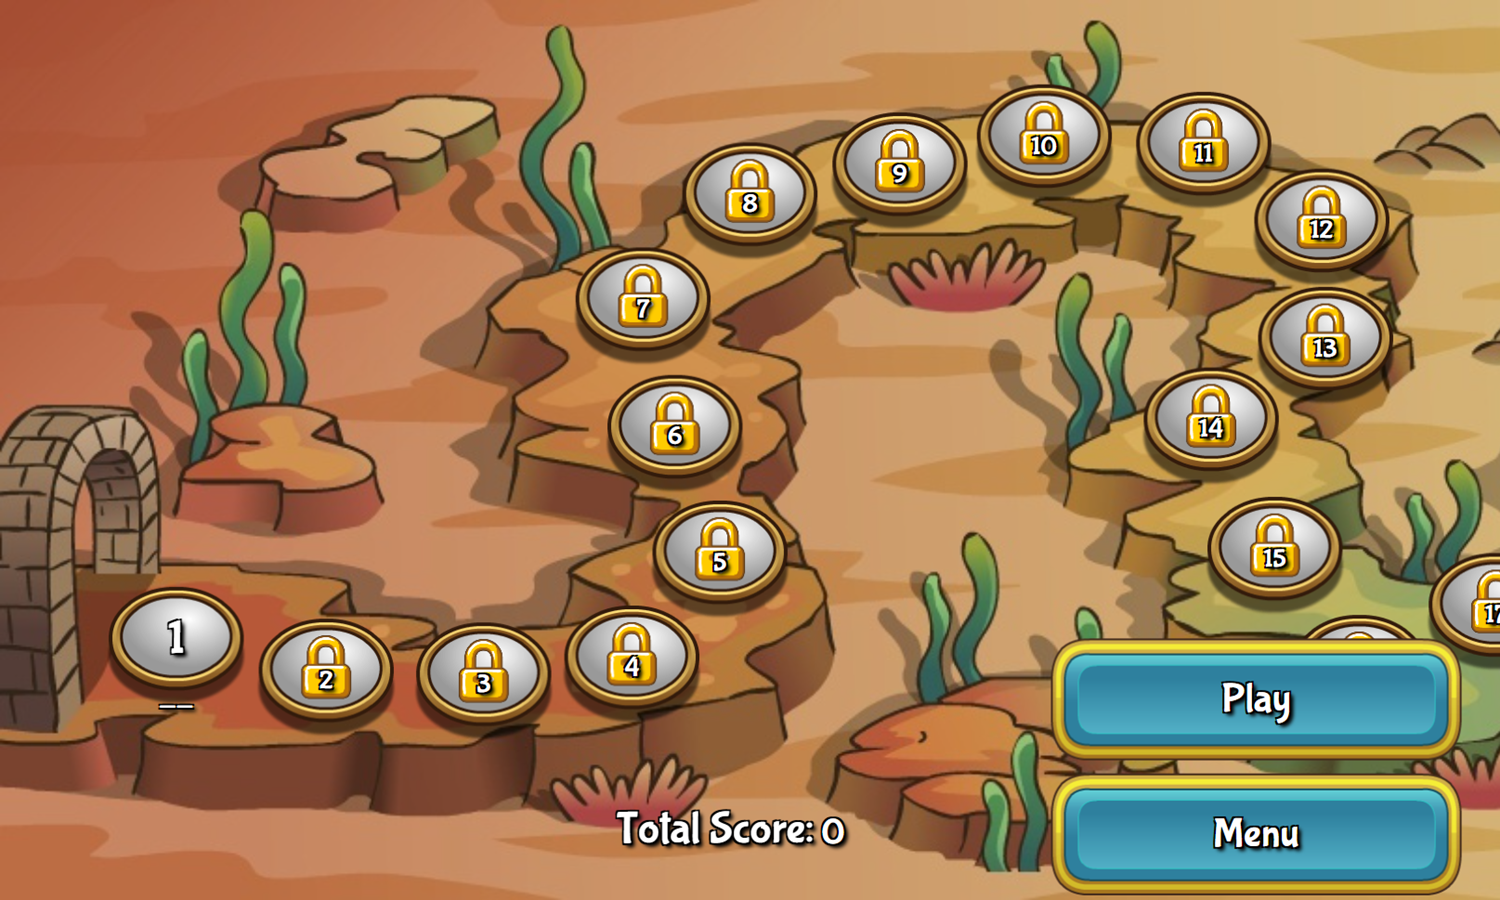 Seajong Game Level Select Screenshot.